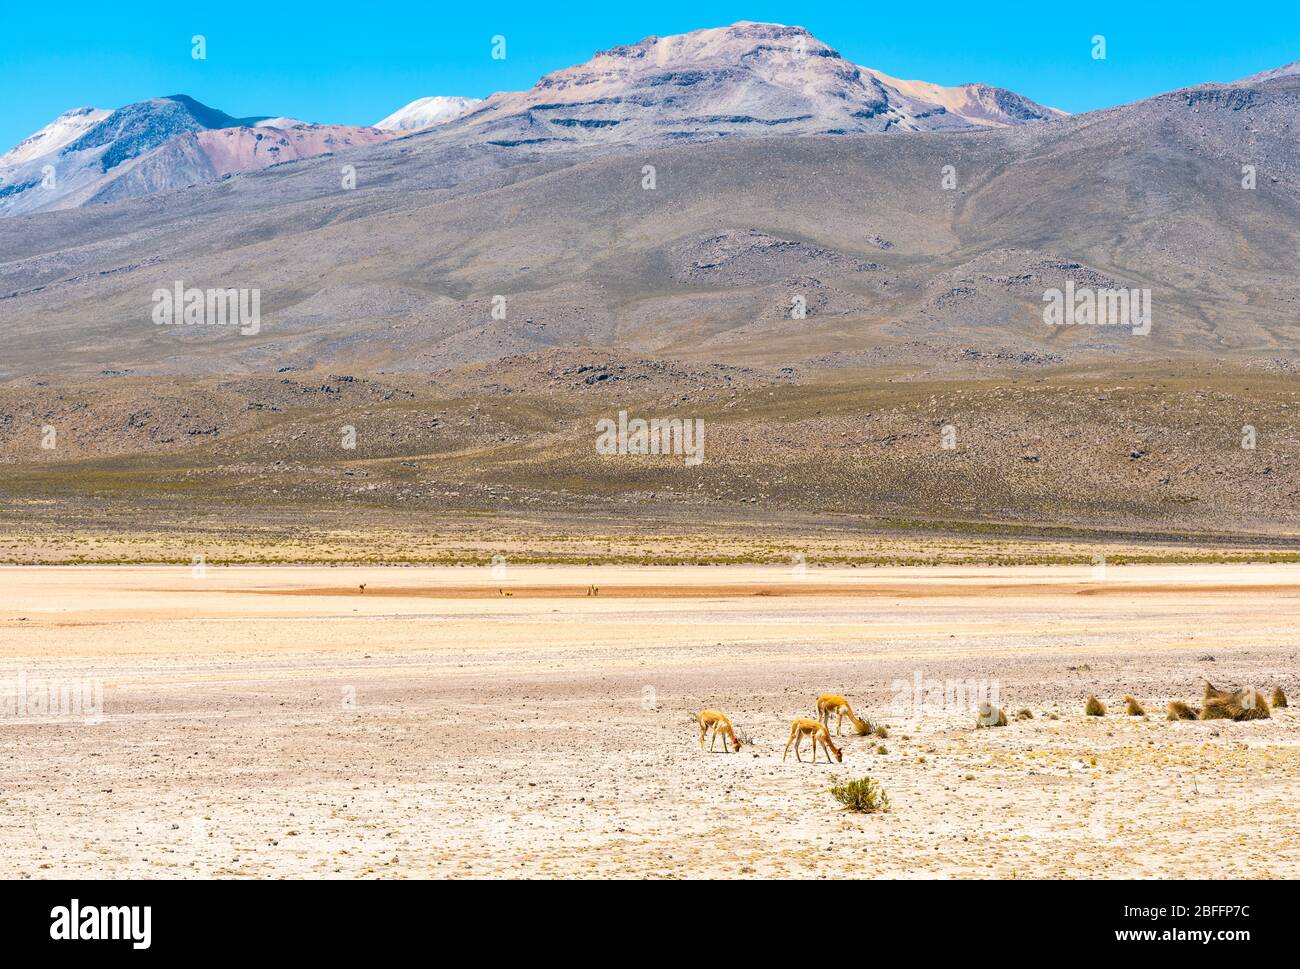 Three vicuna (Vicugna vicugna) in a valley of the Andes mountains, Uyuni Salt Flat region, Bolivia. Stock Photo